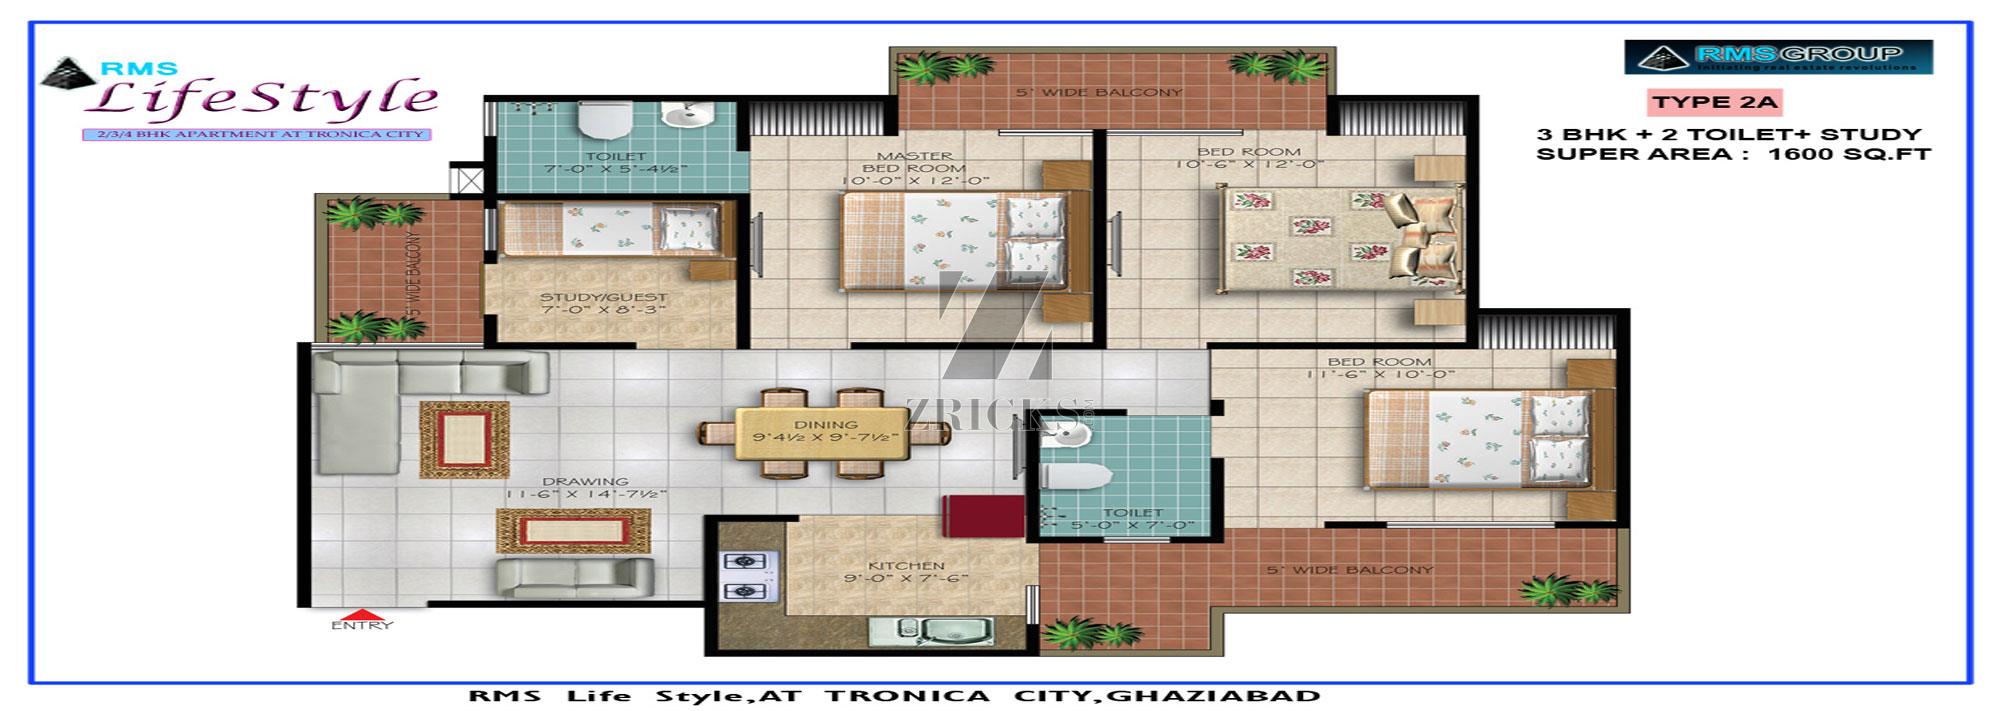 RMS Lifestyle Floor Plan